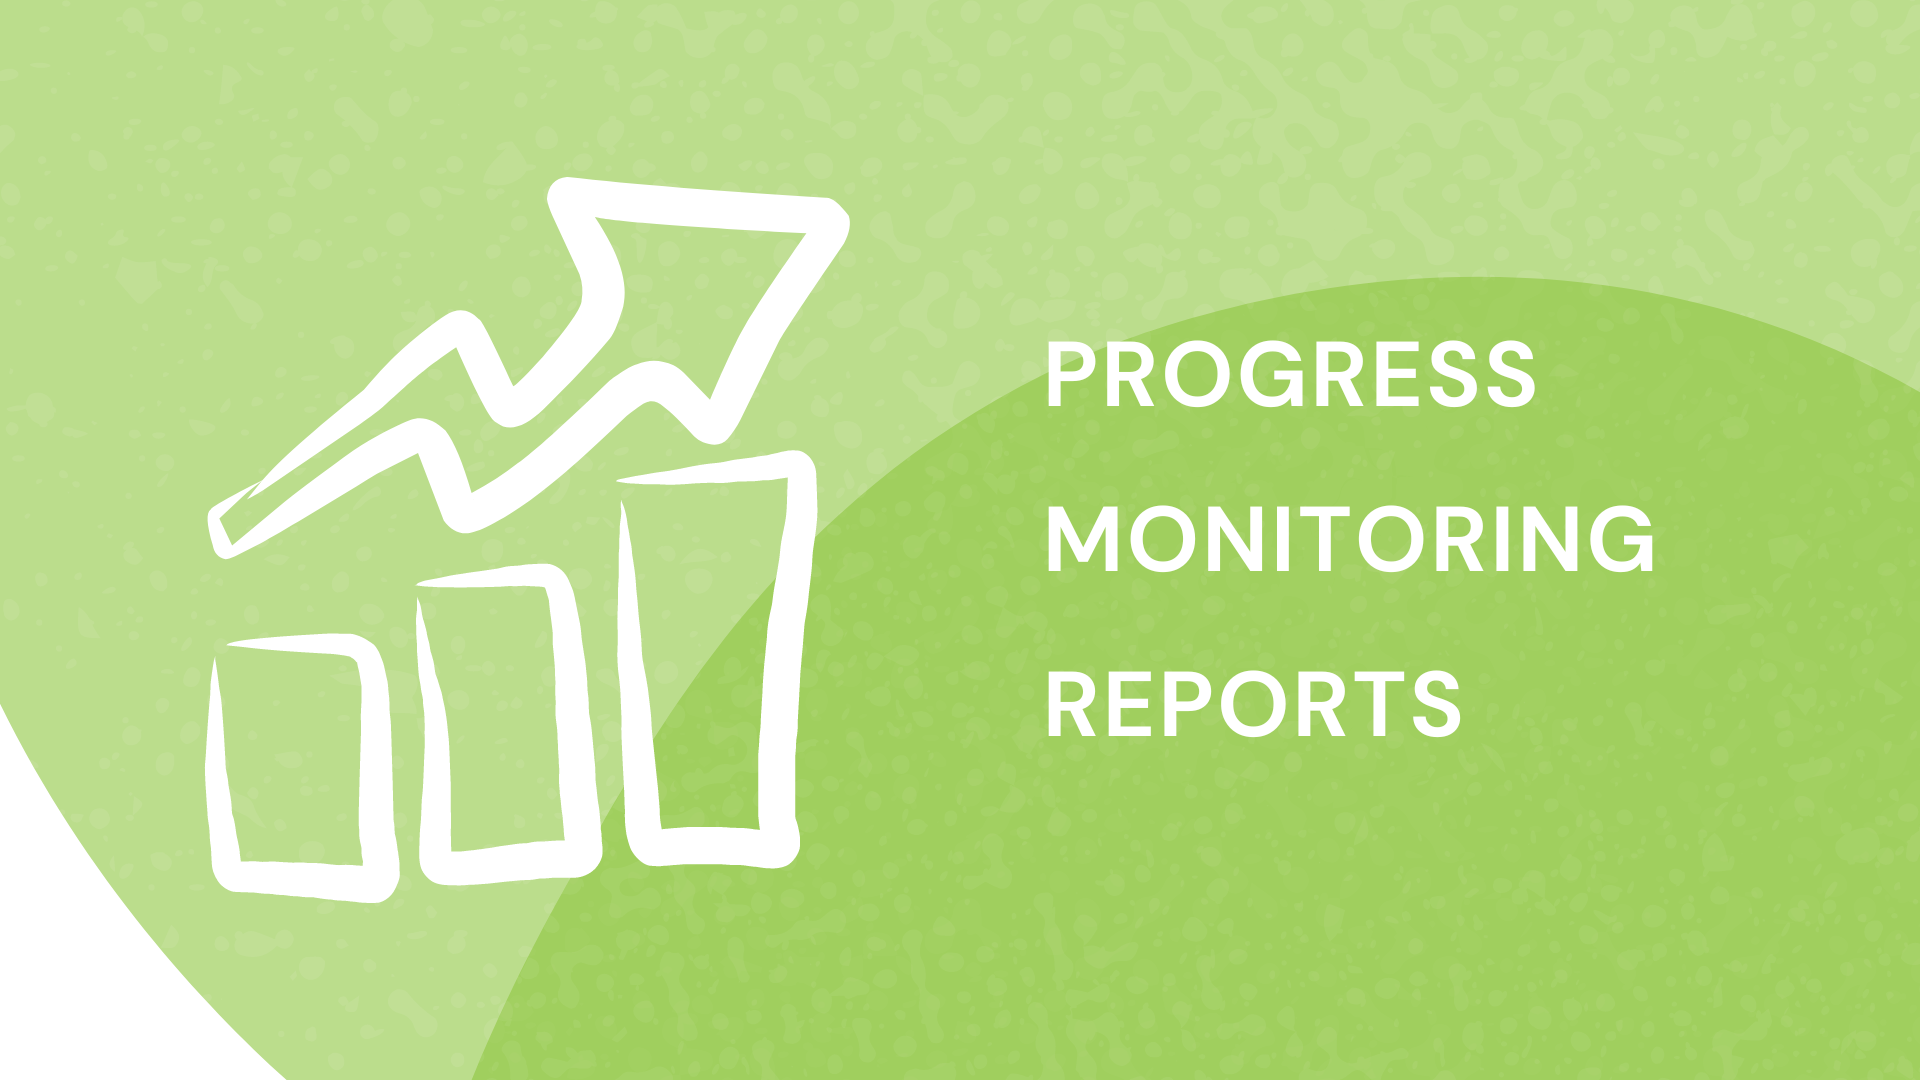 Progress Monitoring Reports